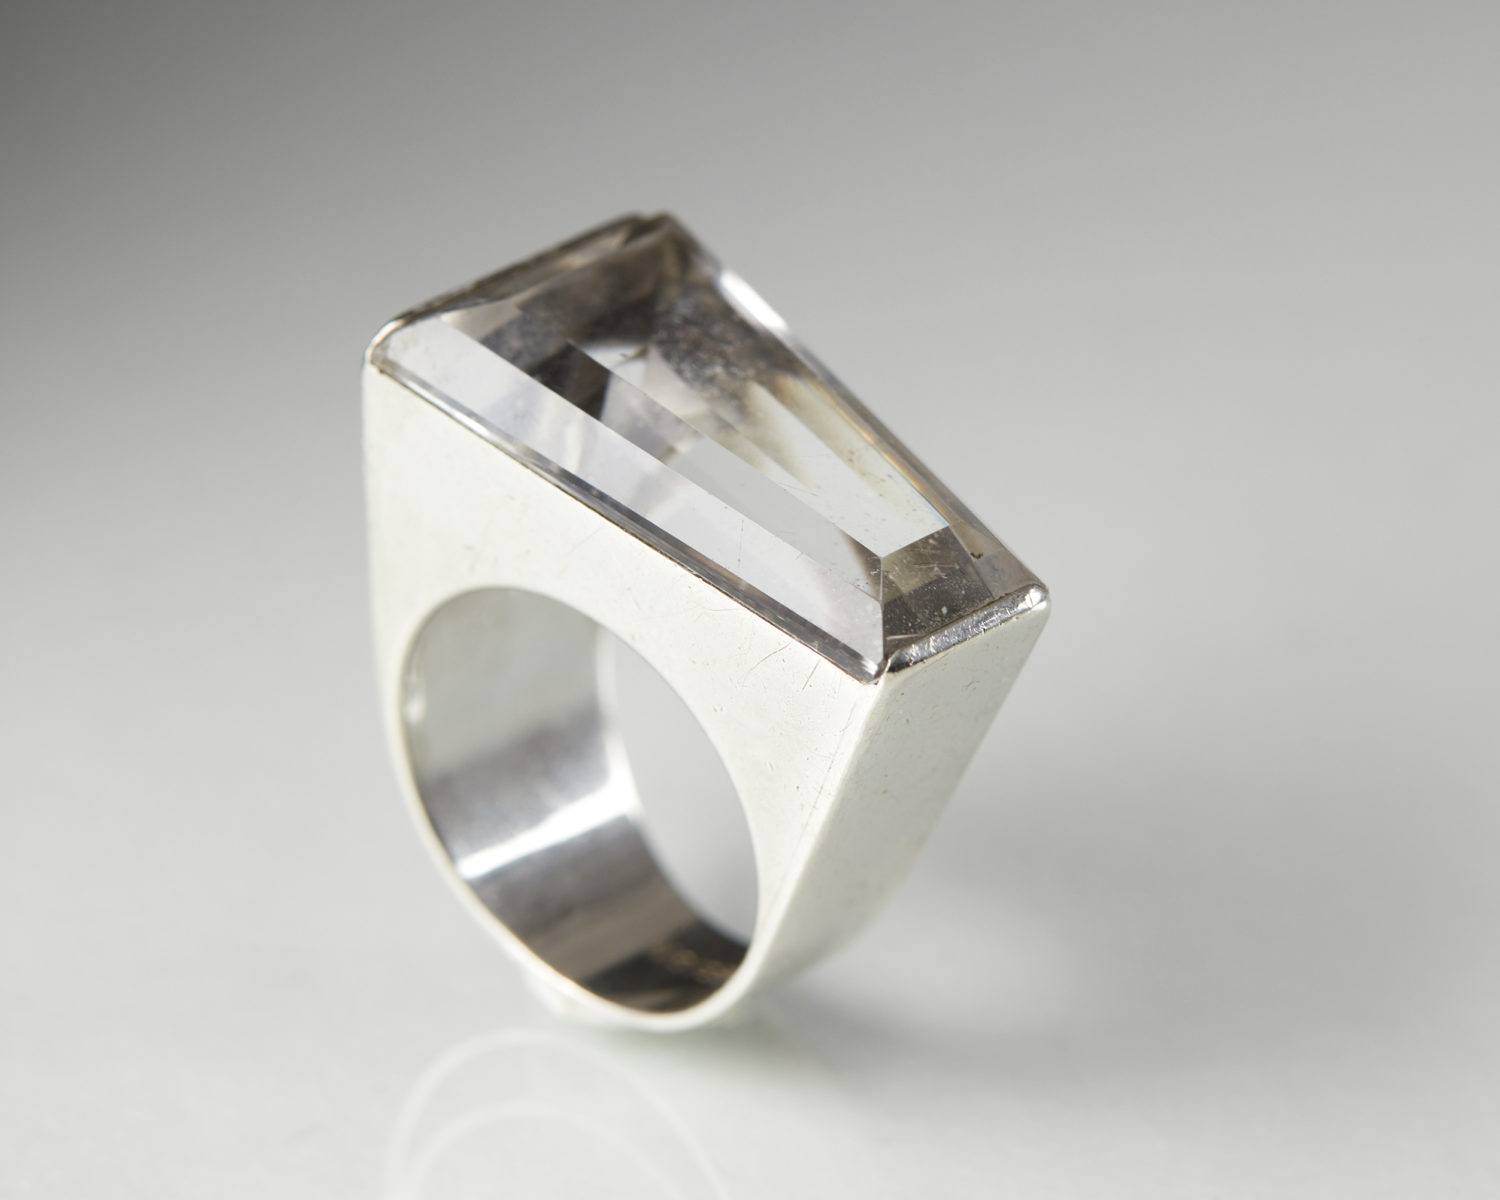 Ring designed by Peter Schütz, — Modernity